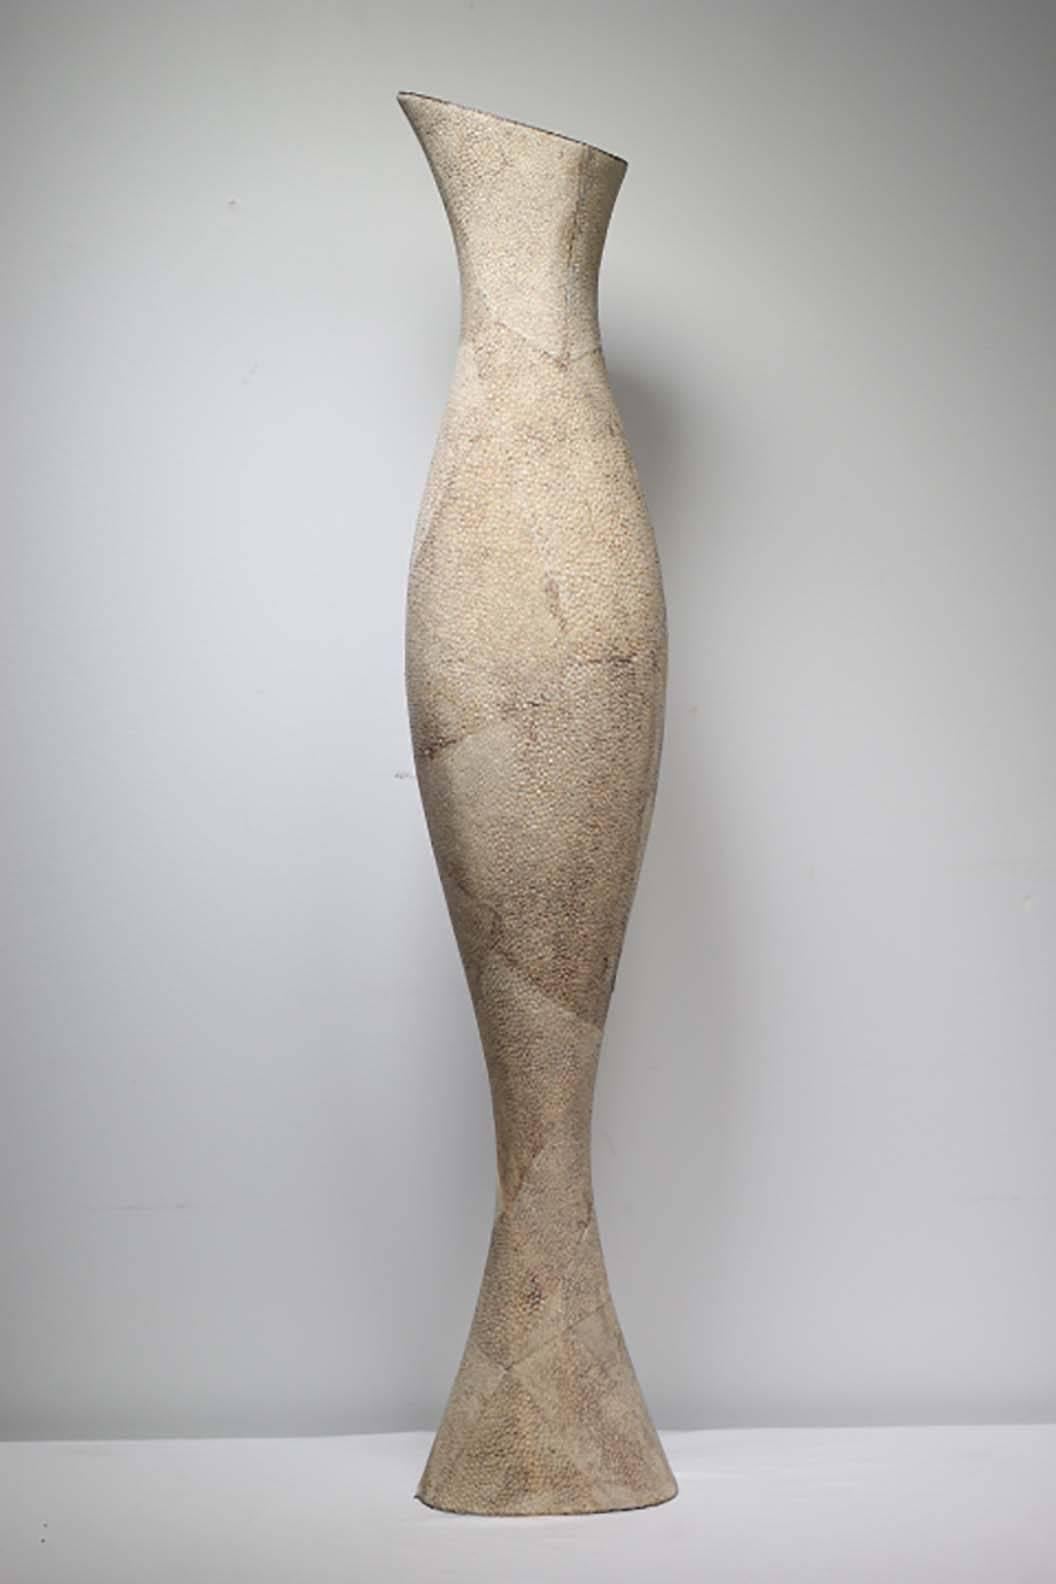 Unique curved sculptural vase sheathed in stingray skin by famed decorative arts design firm R & Y Augousti.